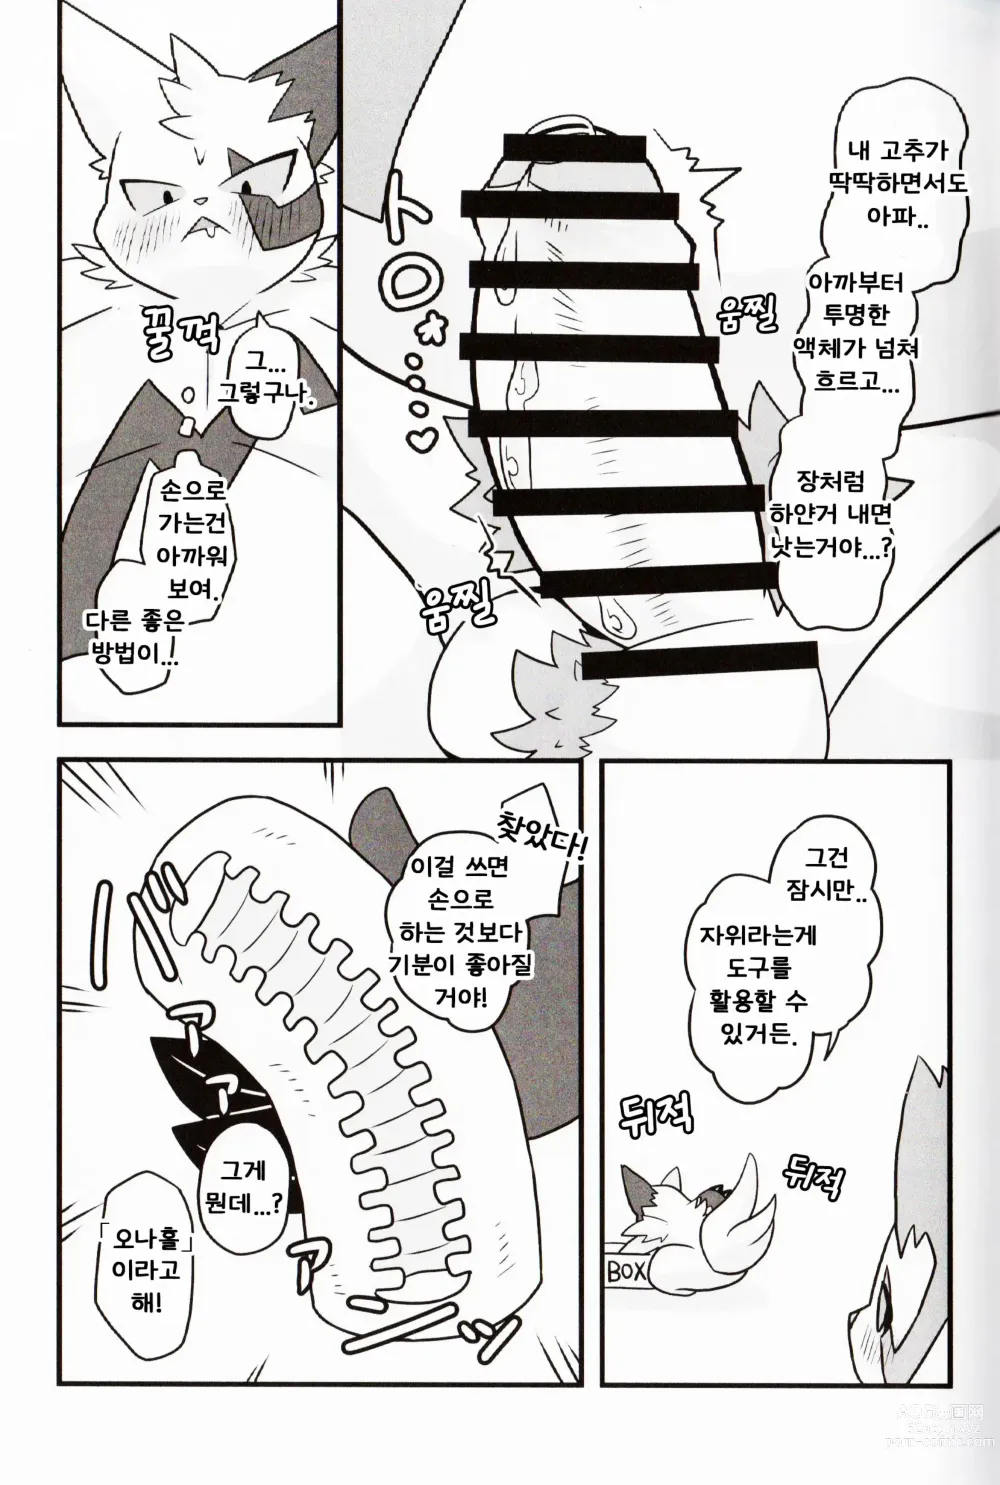 Page 13 of doujinshi No Title